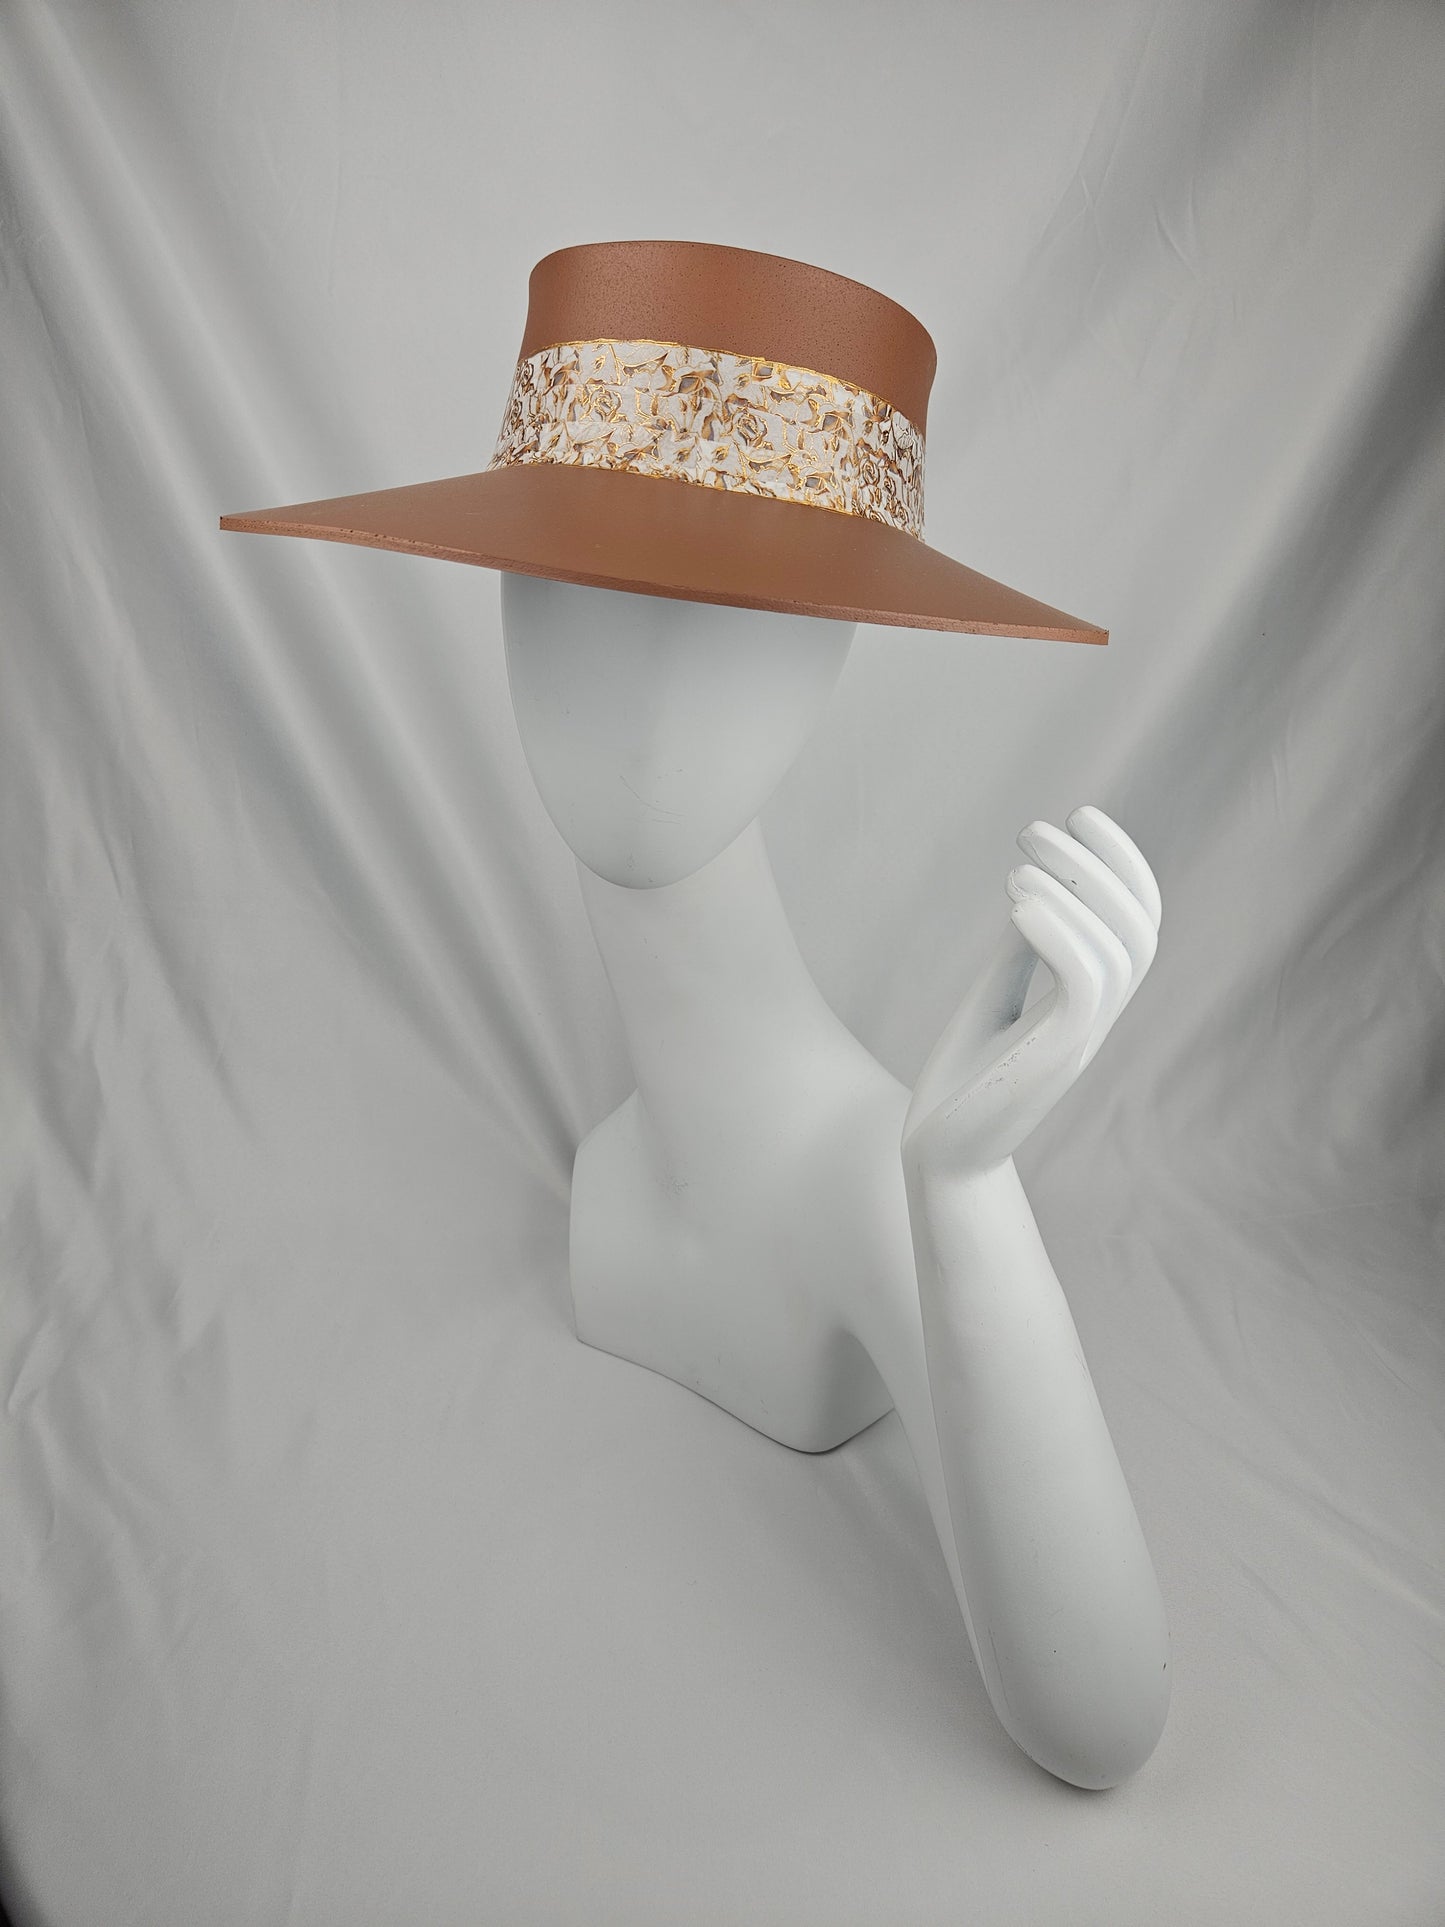 Tall Caramel Brown Audrey Sun Visor Hat with Elegant Gold and White Floral Band: 1940s, Walks, Brunch, Tea, Golf, Wedding, Church, No Headache, Easter, Pool, Beach, Big Brim